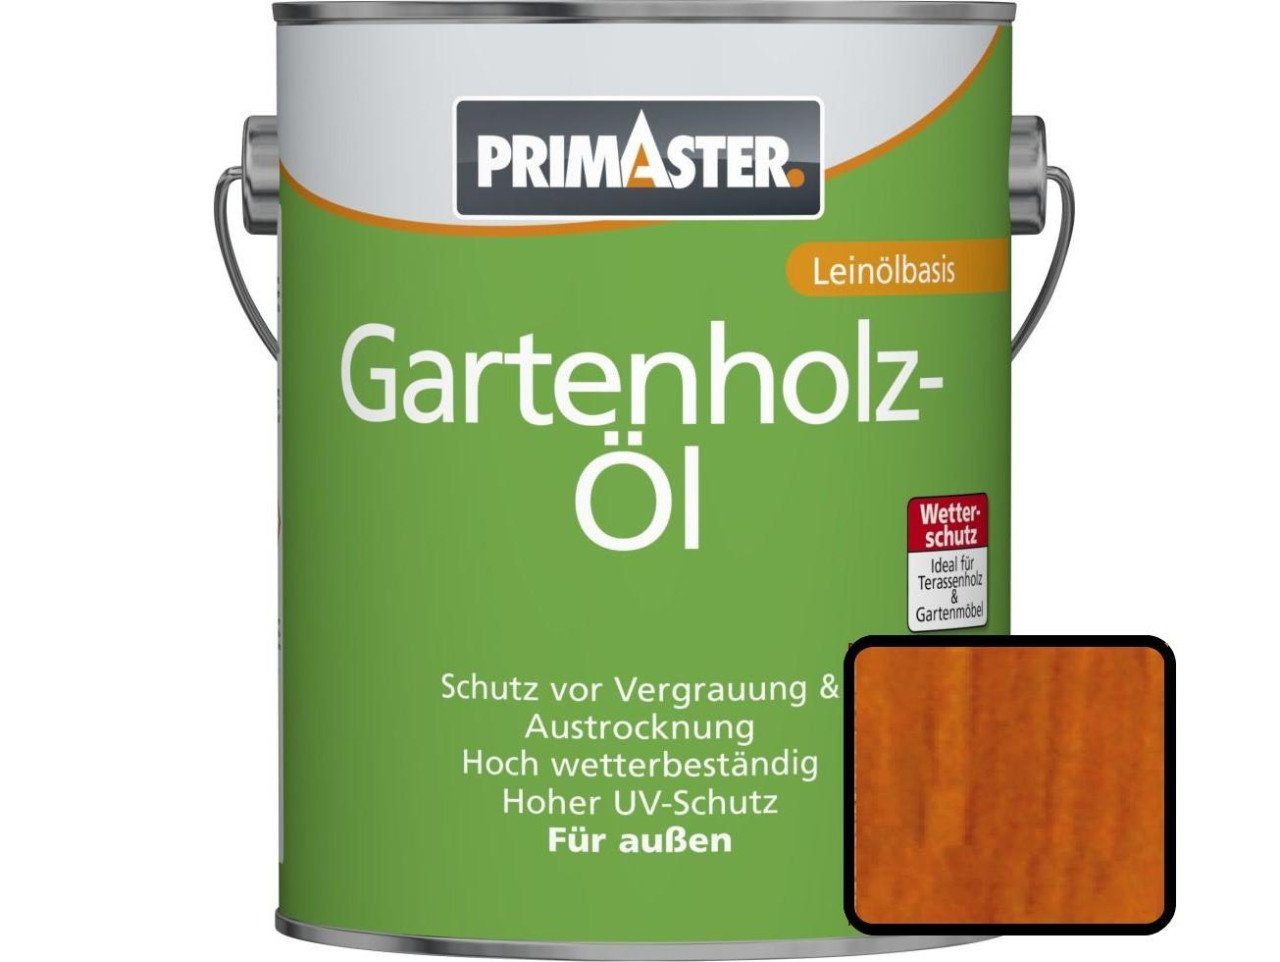 teak ml 750 Gartenholzöl Hartholzöl Primaster Primaster